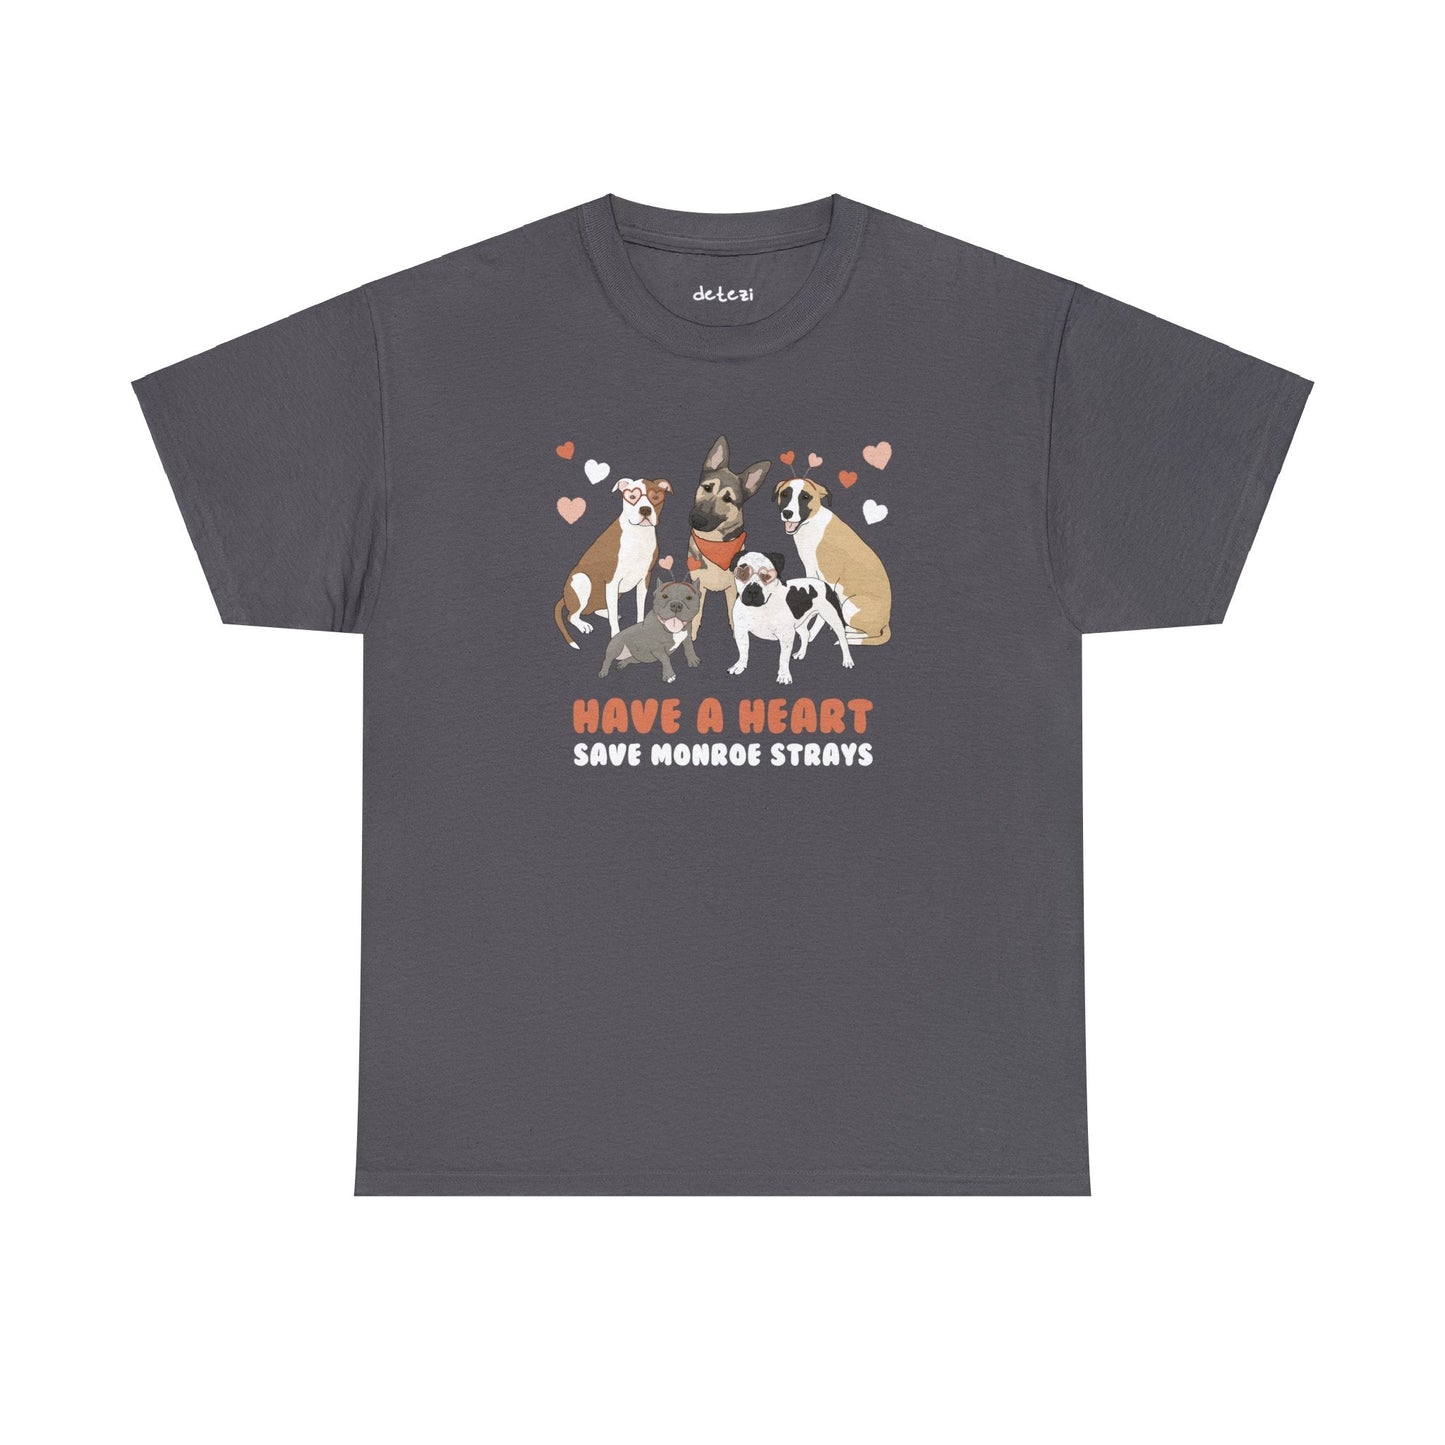 Save Monroe Strays | FUNDRAISER | T-shirt - Detezi Designs-23648622017896070165